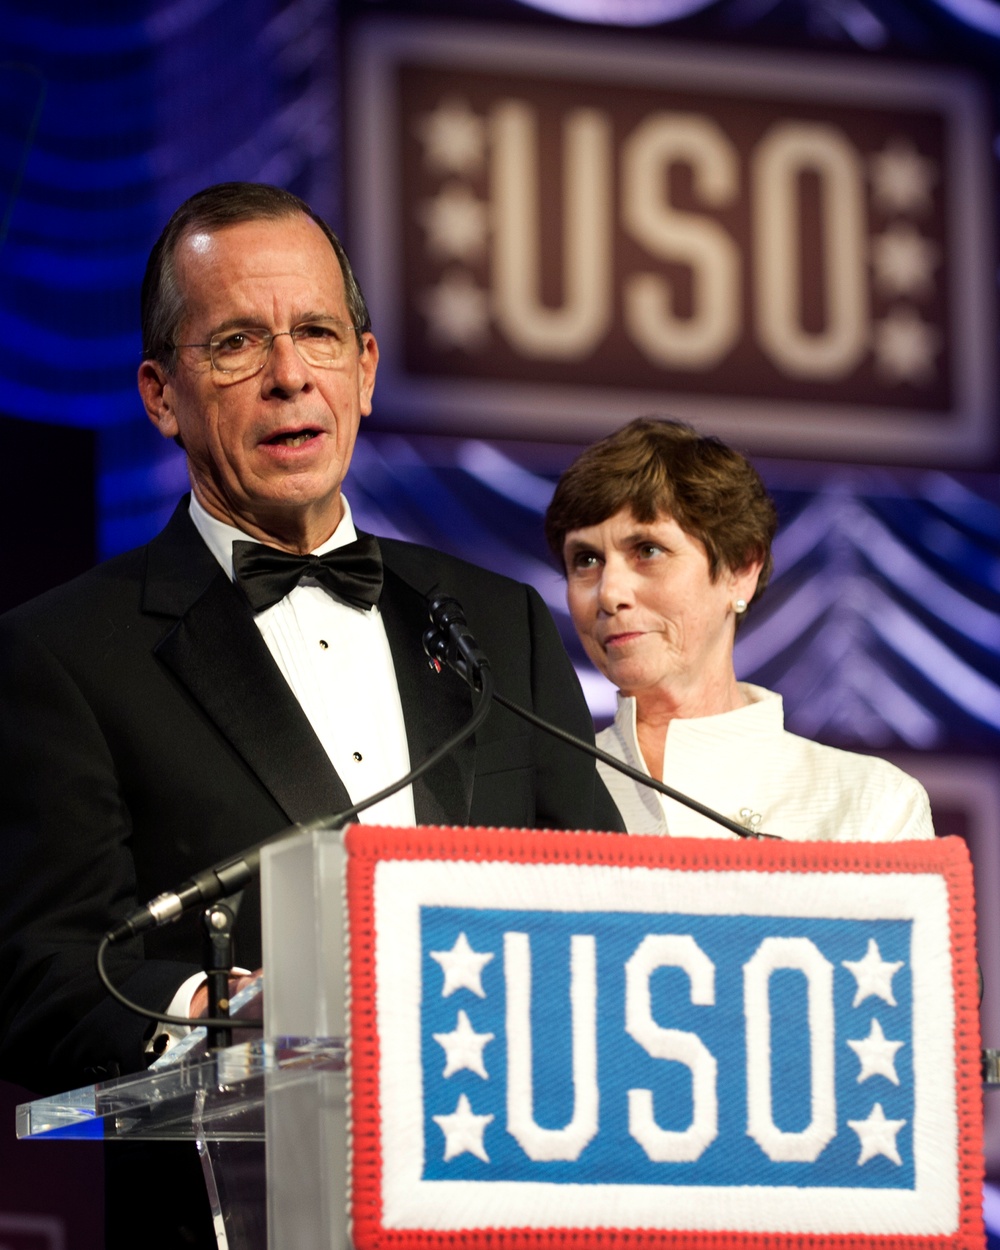 2012 USO Gala